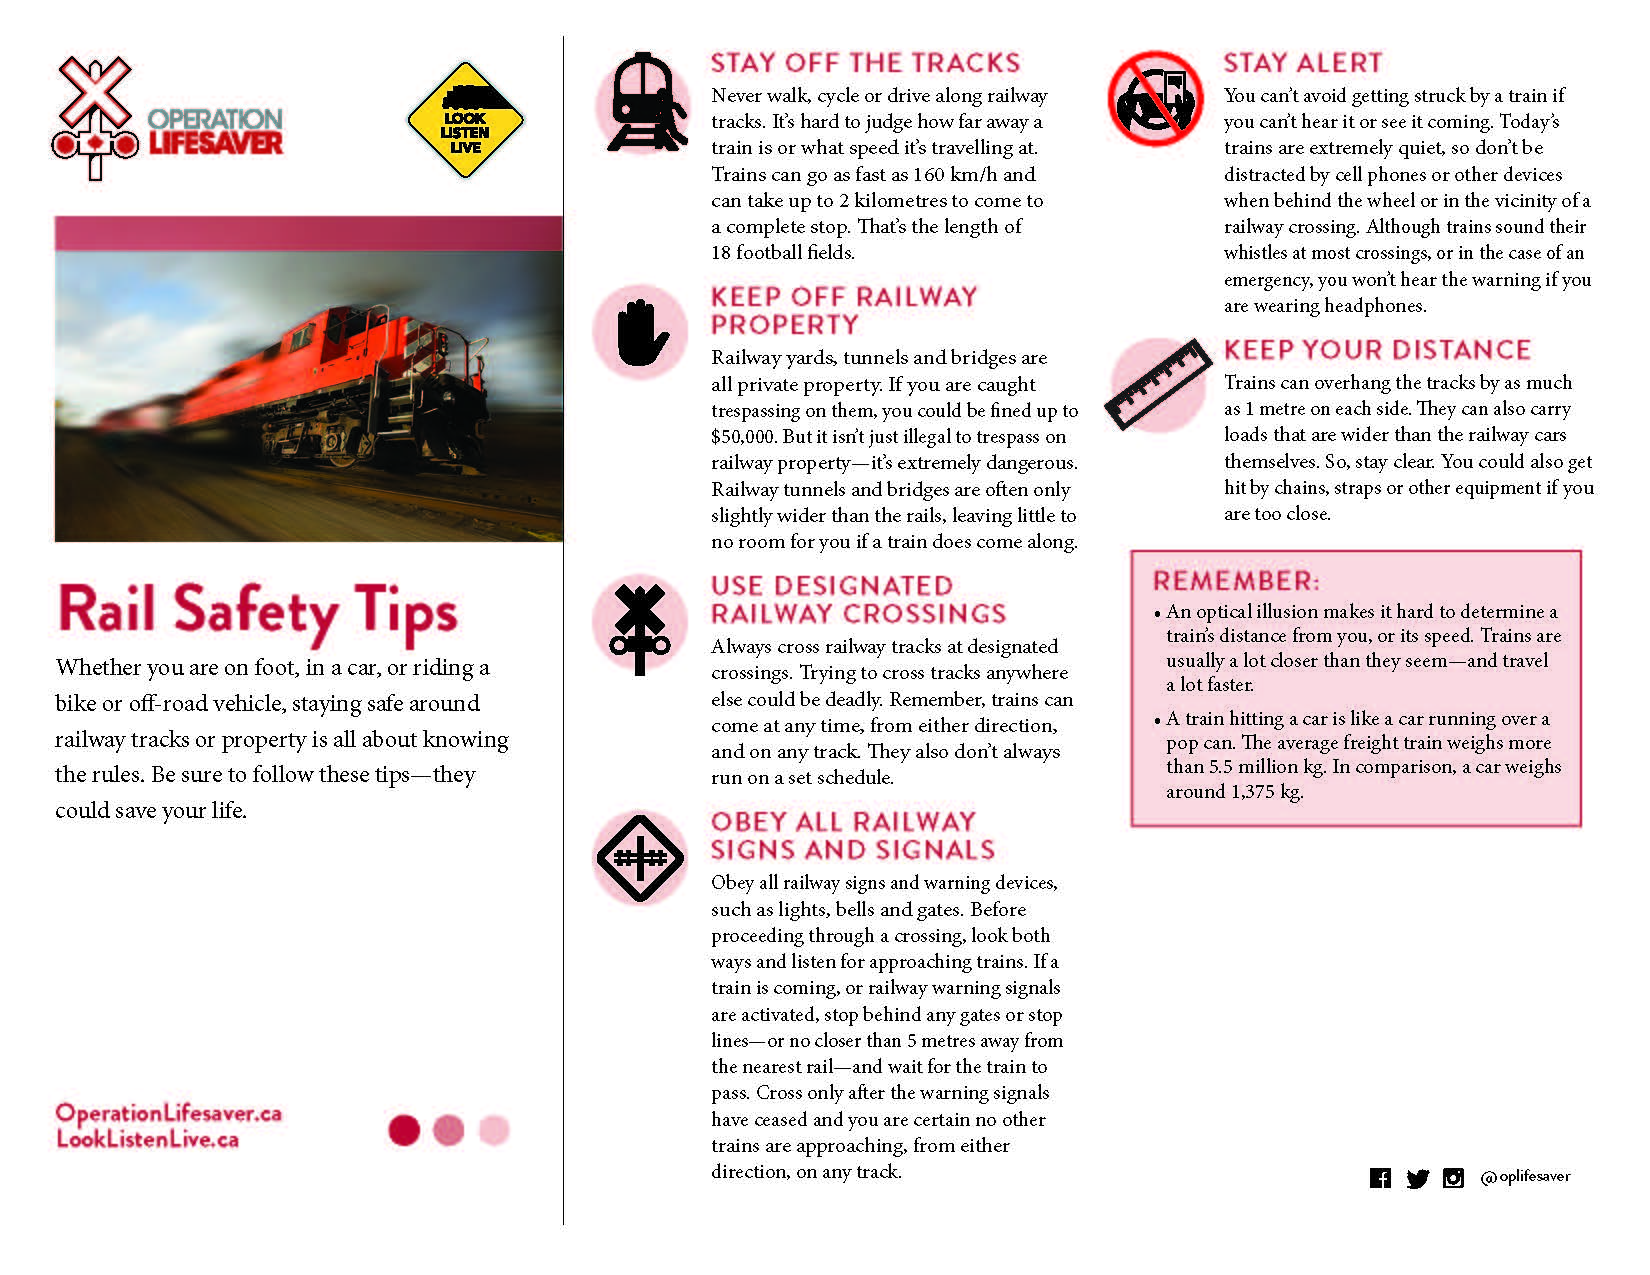 Rail Safety General